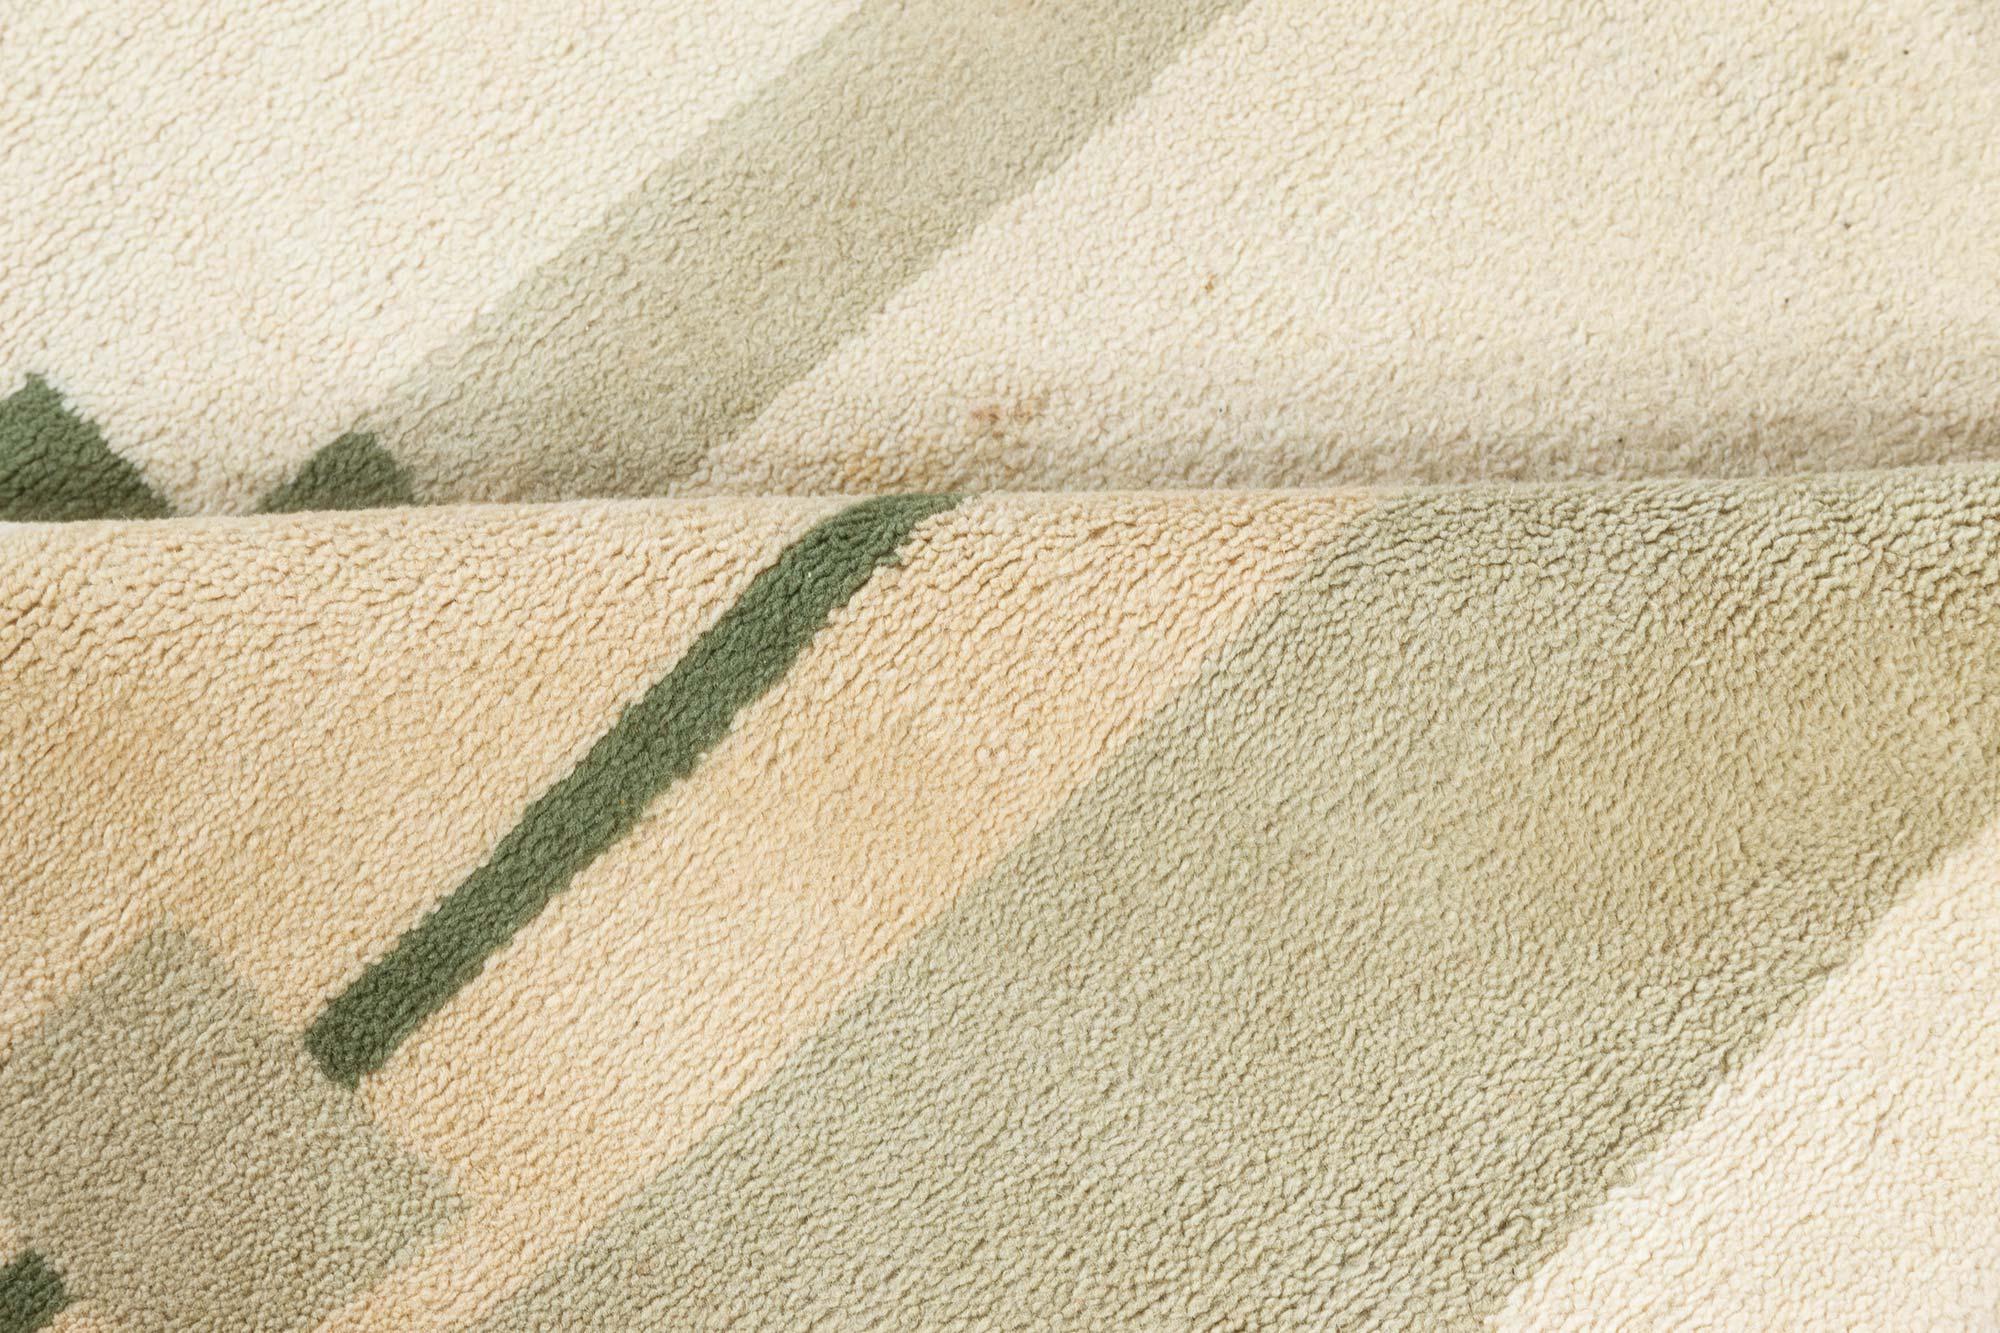 Midcentury Art Deco handmade wool rug in beige and green
Size: 8'5